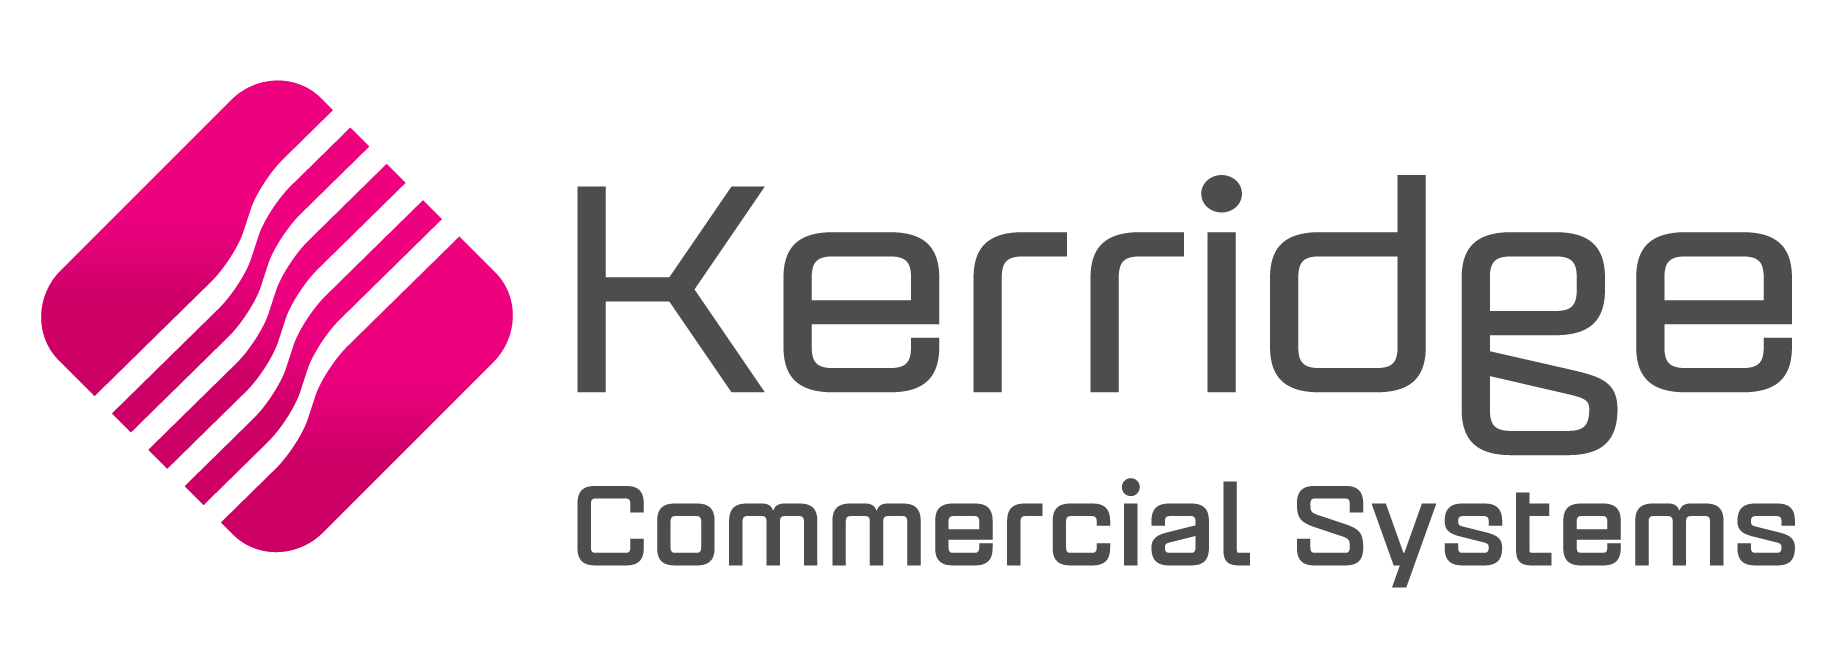 Kerridge Commercial Systems Logo